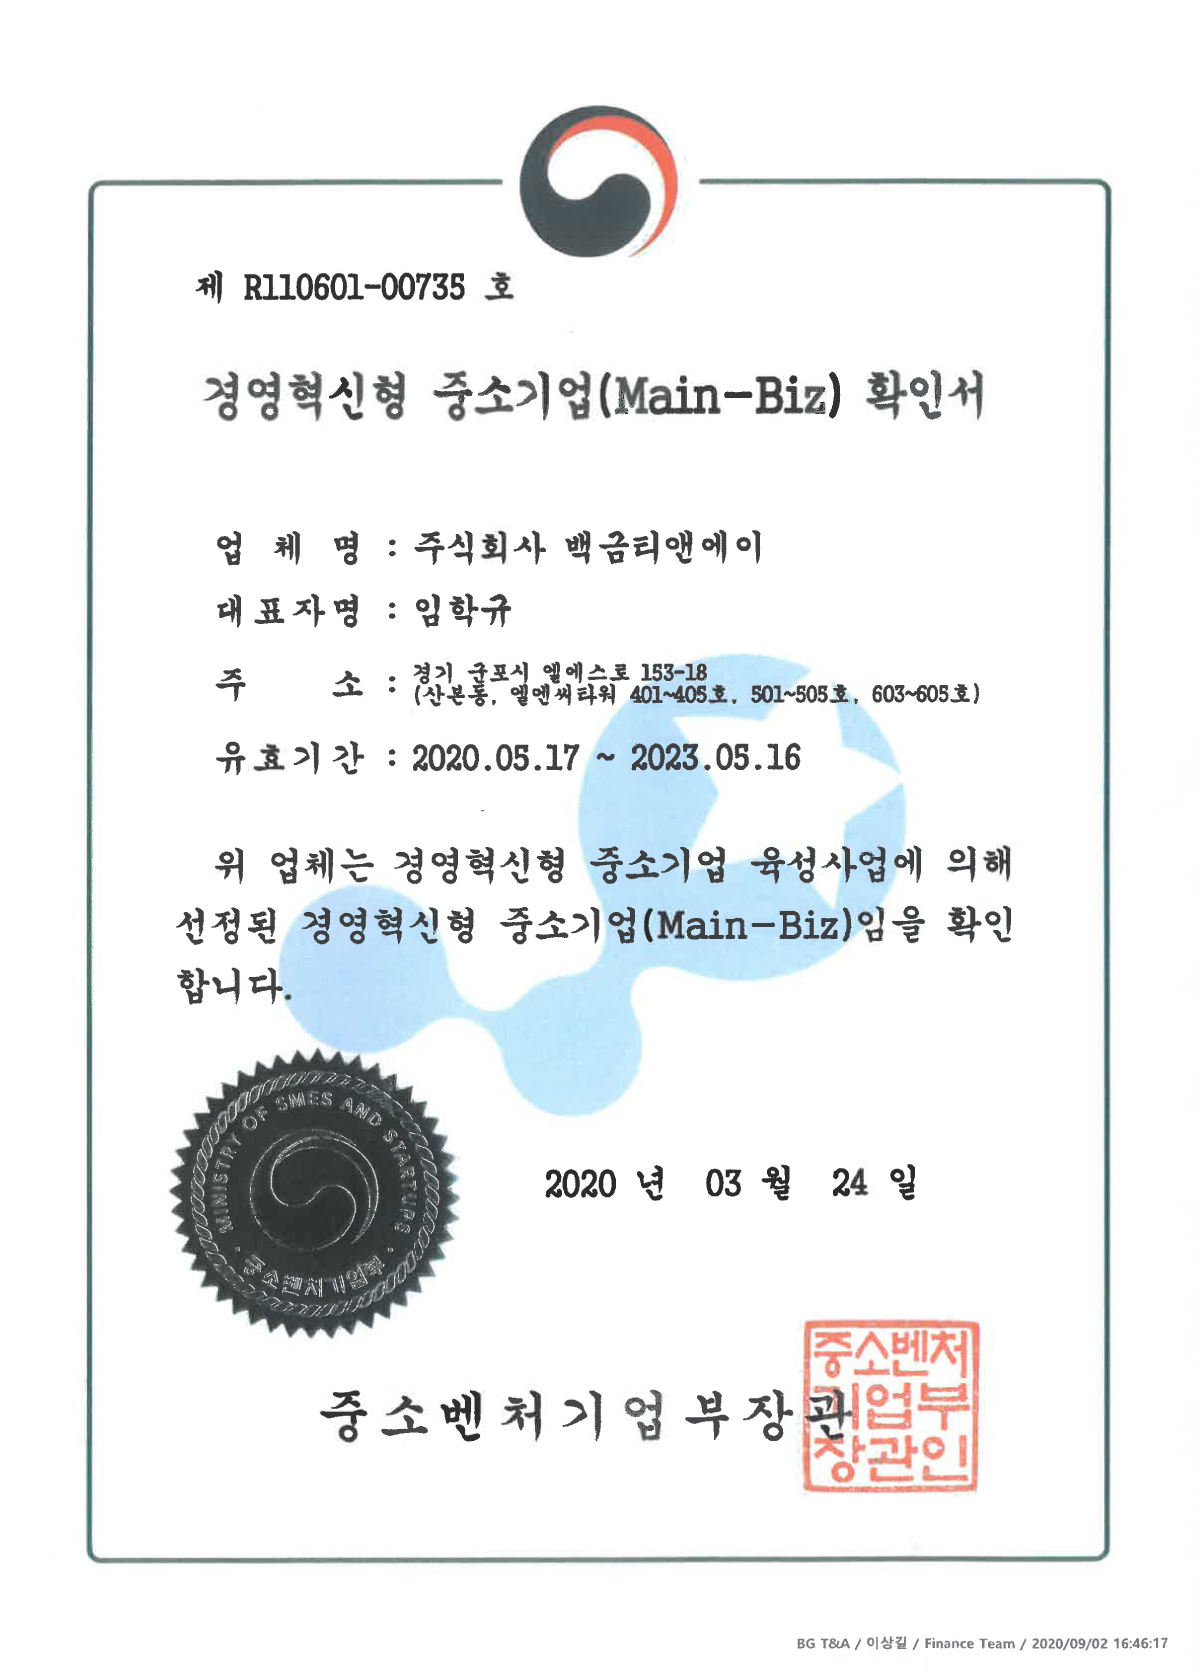 Main-Biz certificate 